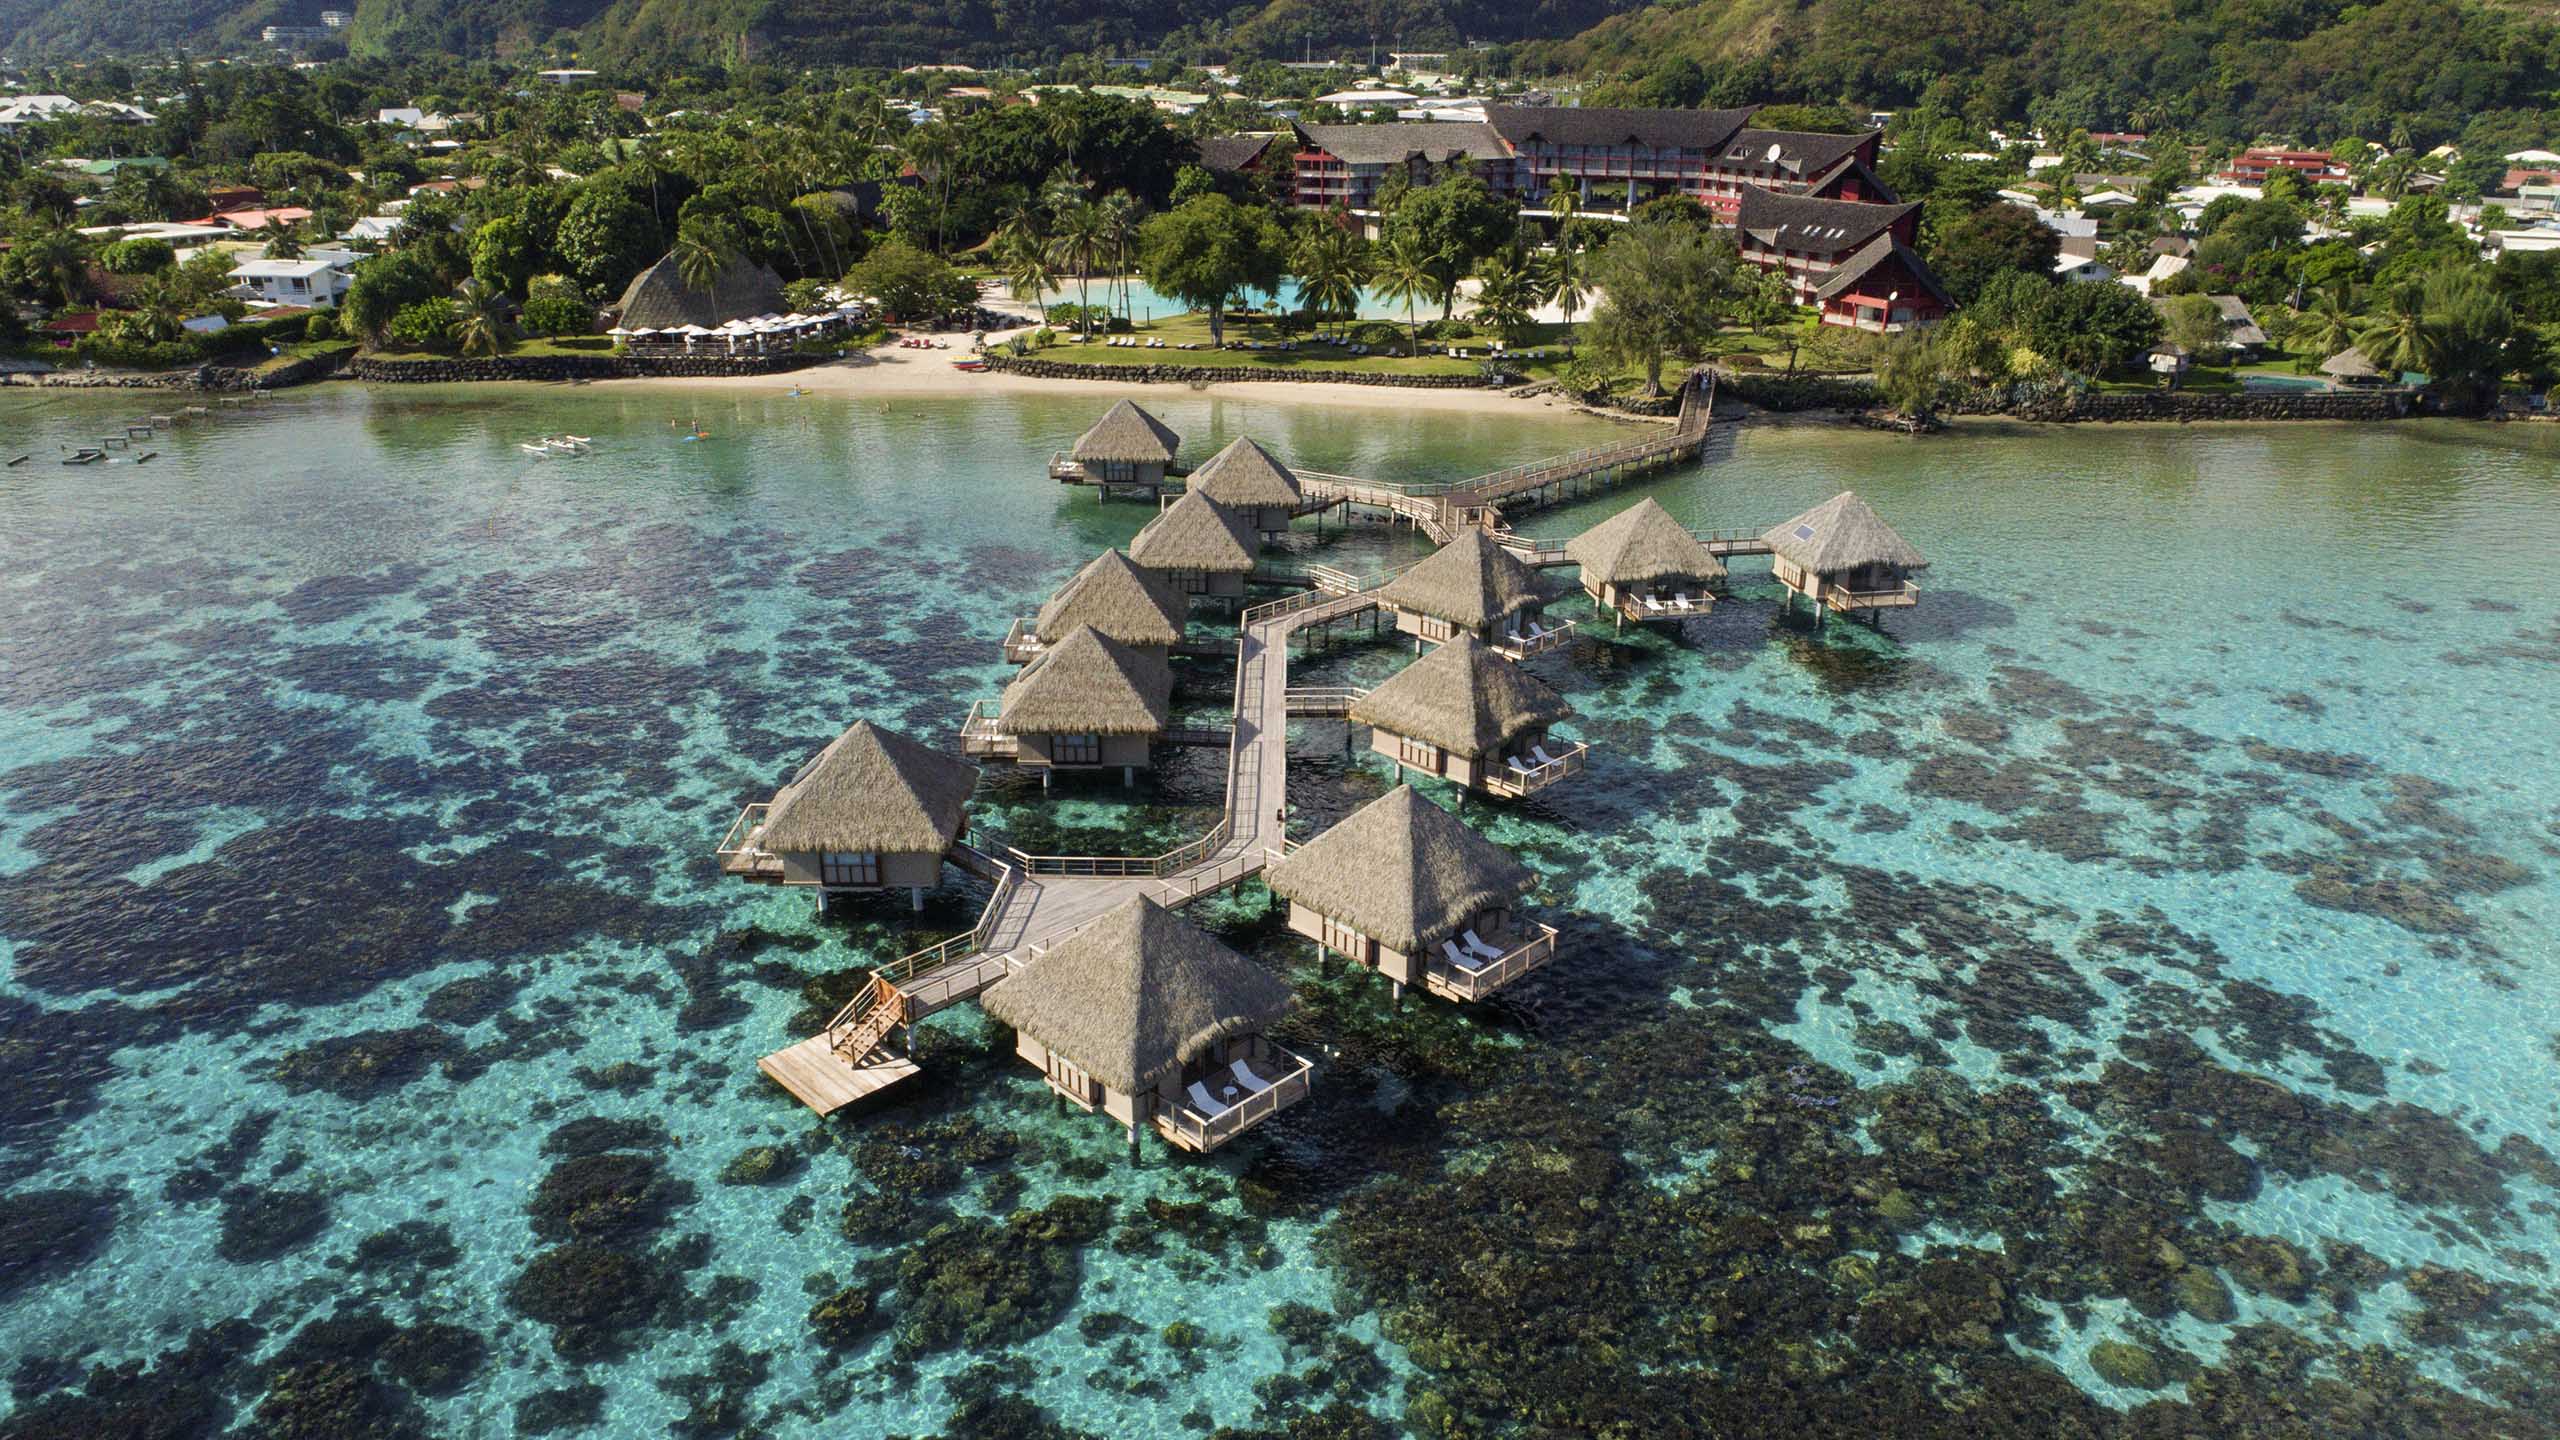 Tahiti Ia Ora Beach Resort - Managed by Sofitel (Closed) - Image 2